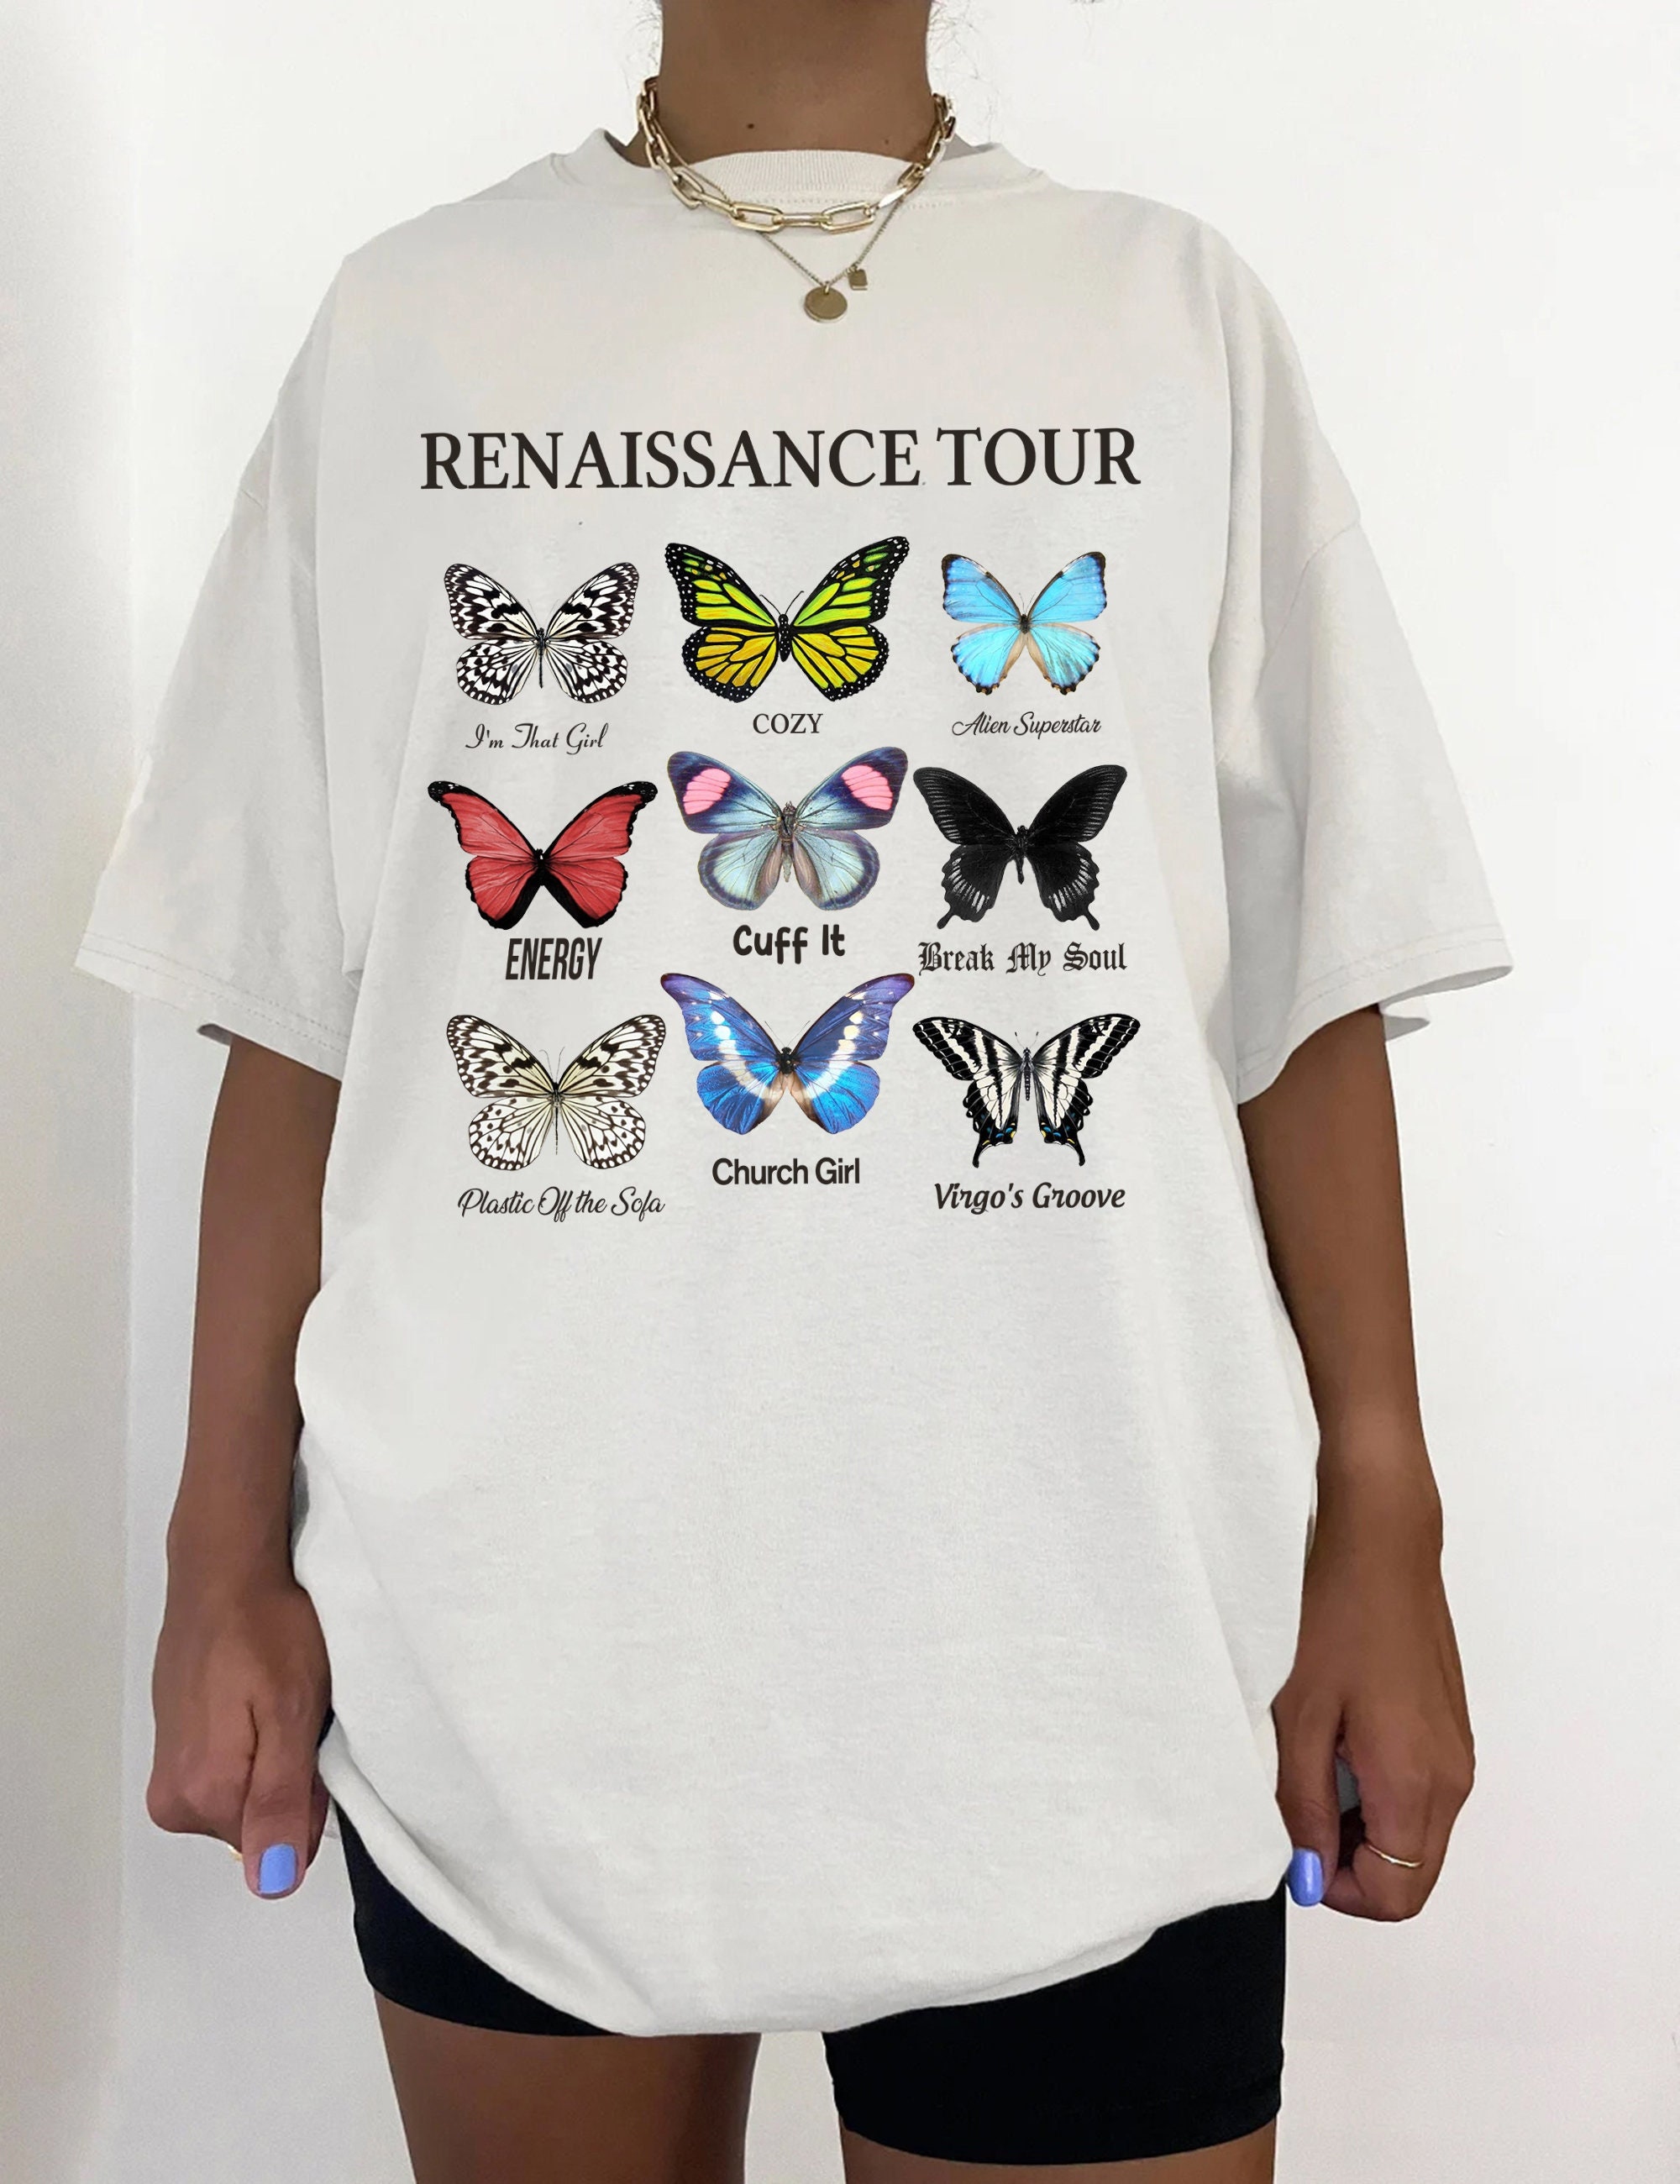 Discover Renaissance Tour Shirt, N€W Album World Tour 2023 Tee, Break My Soul 90s Vintage Shirt, Gift For Her